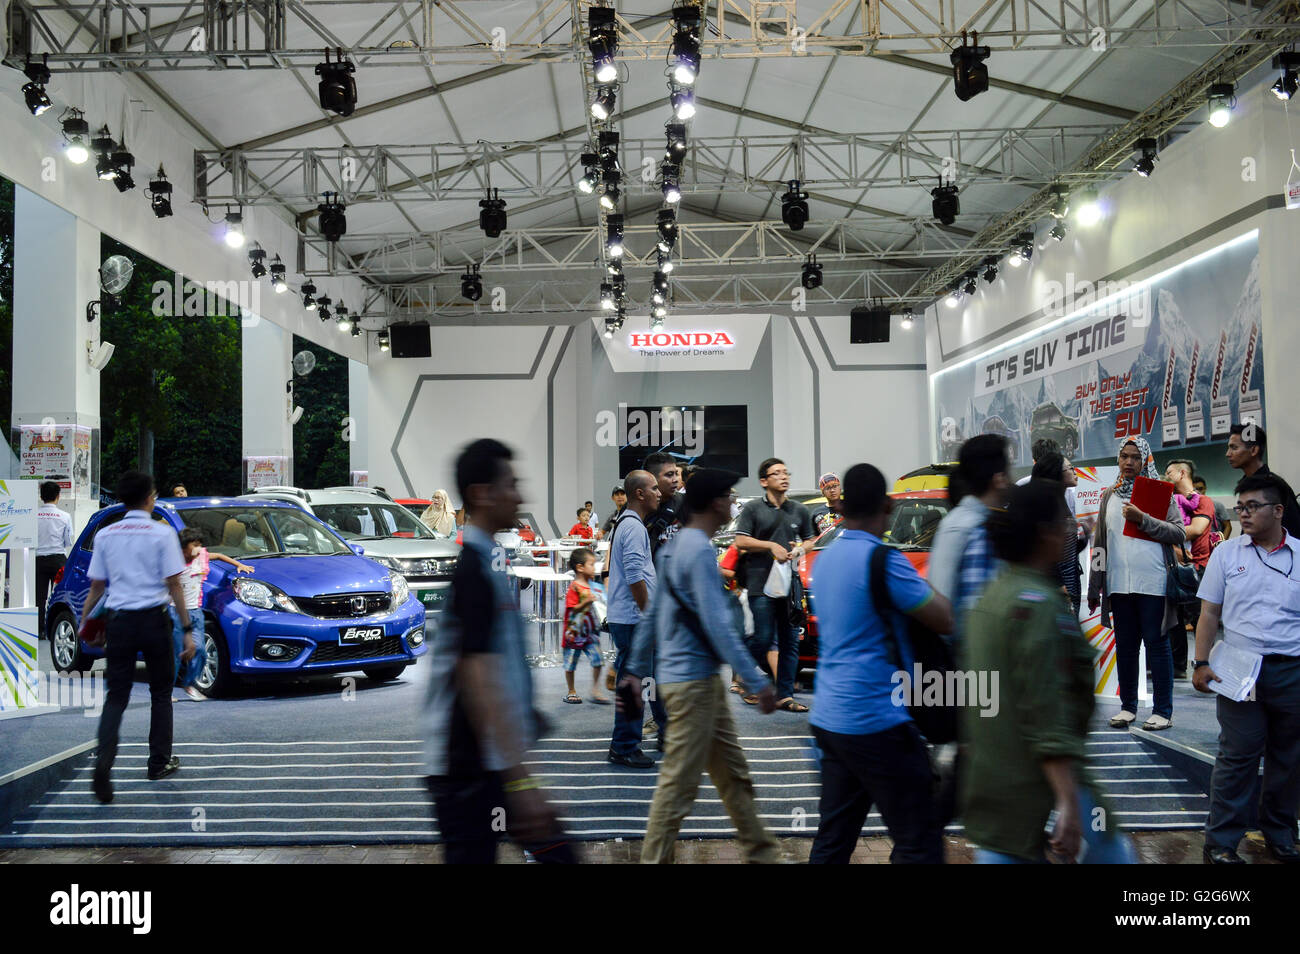 People visiting honda booth at automotive event tumplek blek 2016, Jakarta, Indonesia Stock Photo